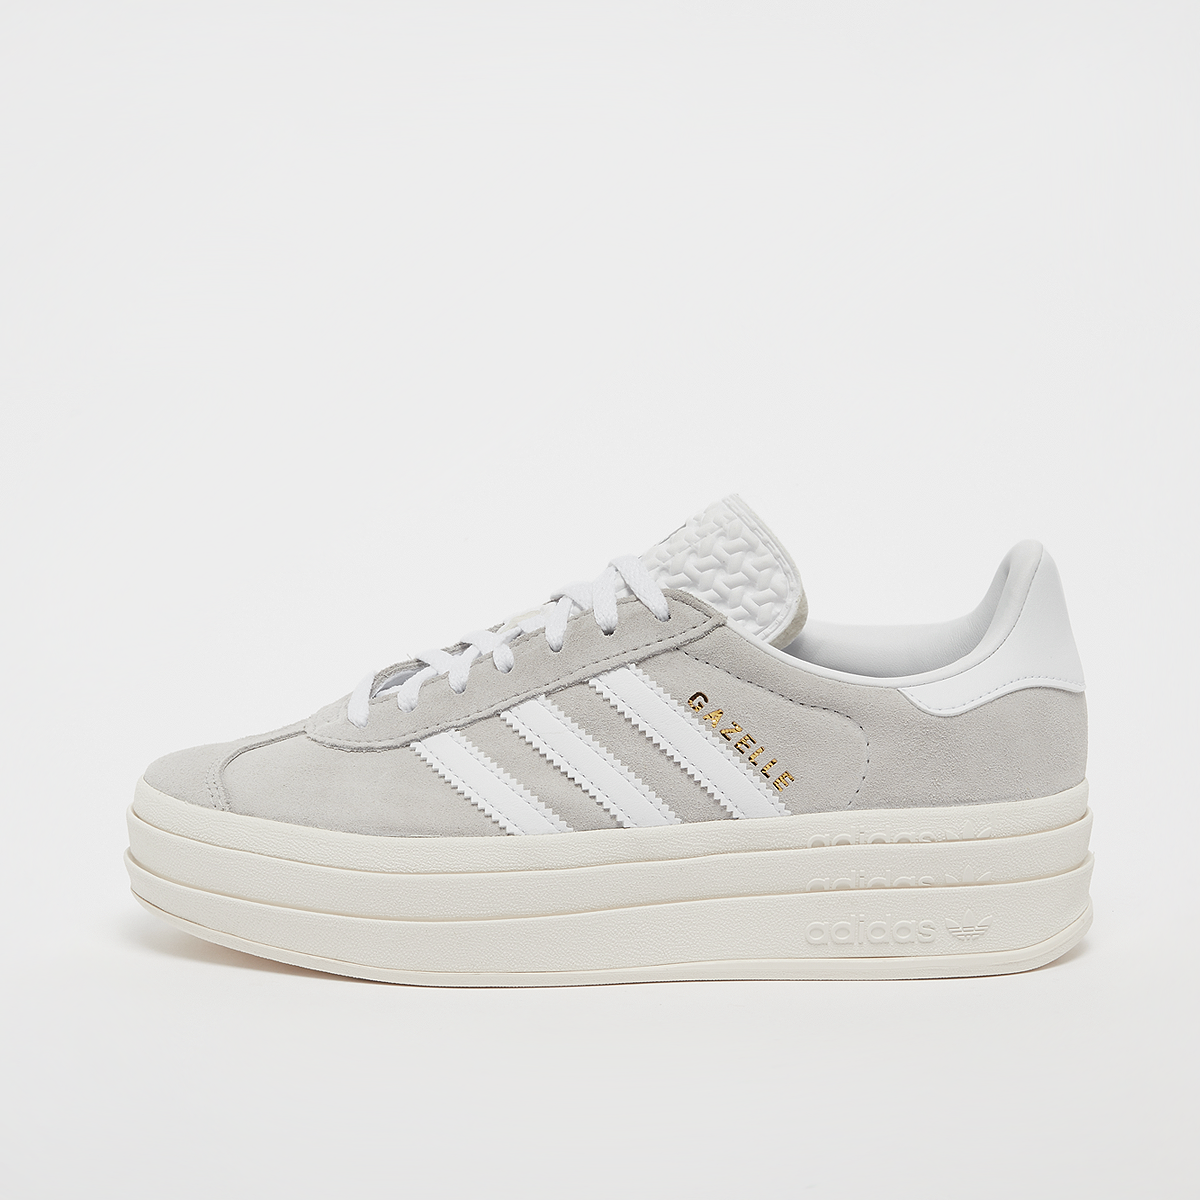 Sneaker Gazelle Bold W, adidas Originals, Footwear, grey two/ftwr white/core white, taille: 38